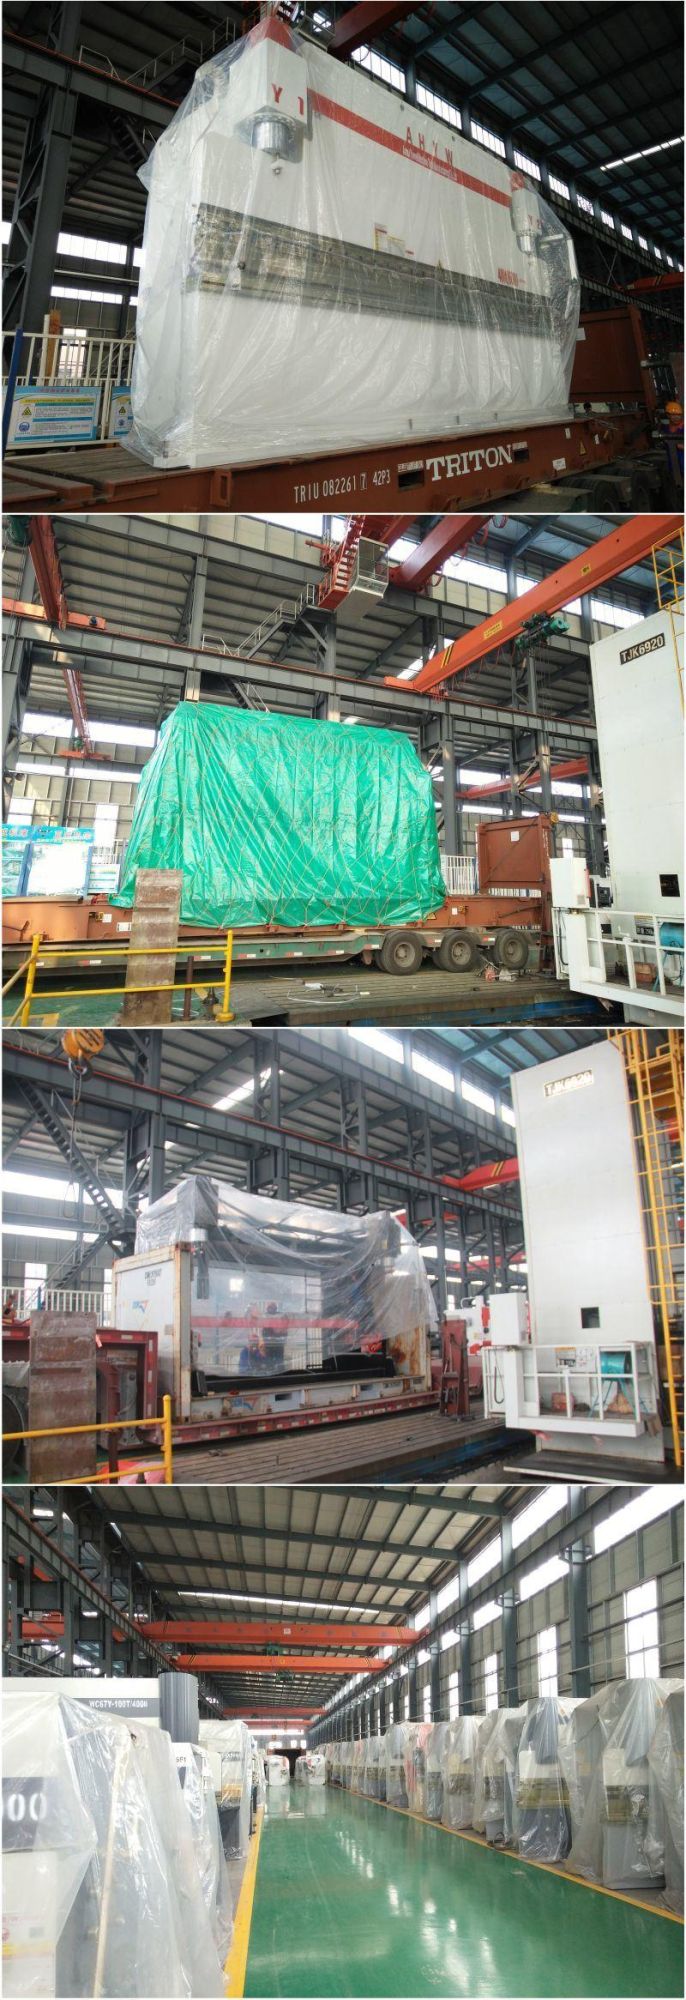 Ahyw Anhui Yawei 7 Meters 1000 Tons Hydraulic Press Brake